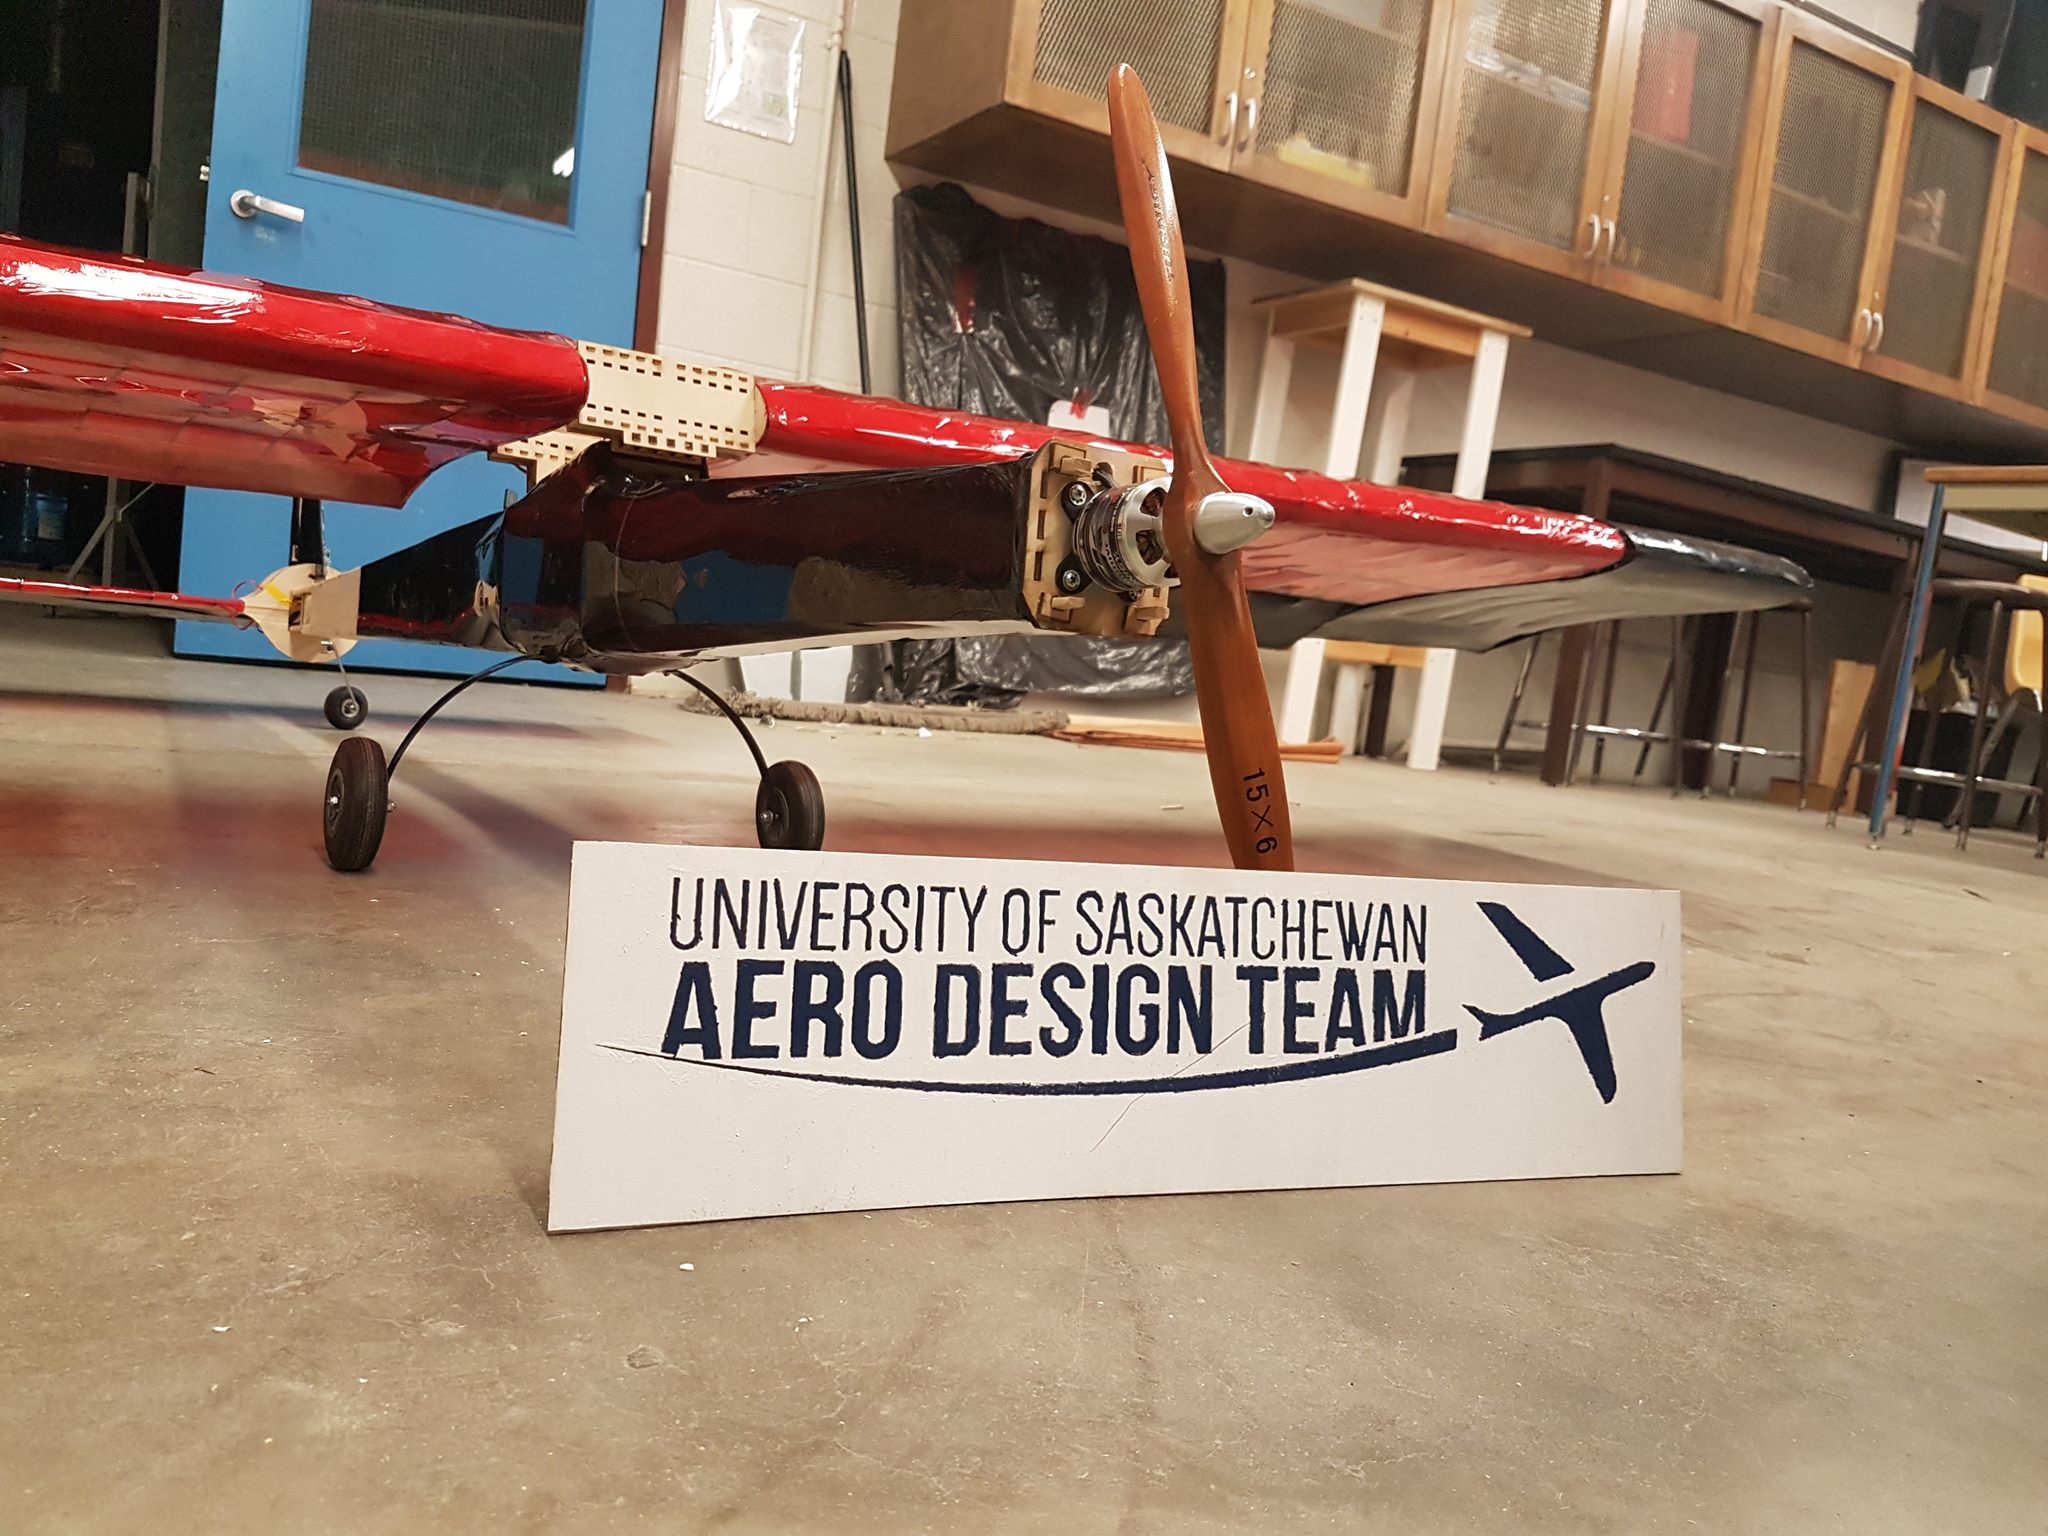 The U of S Aero Design Team's balsa wood aircraft design